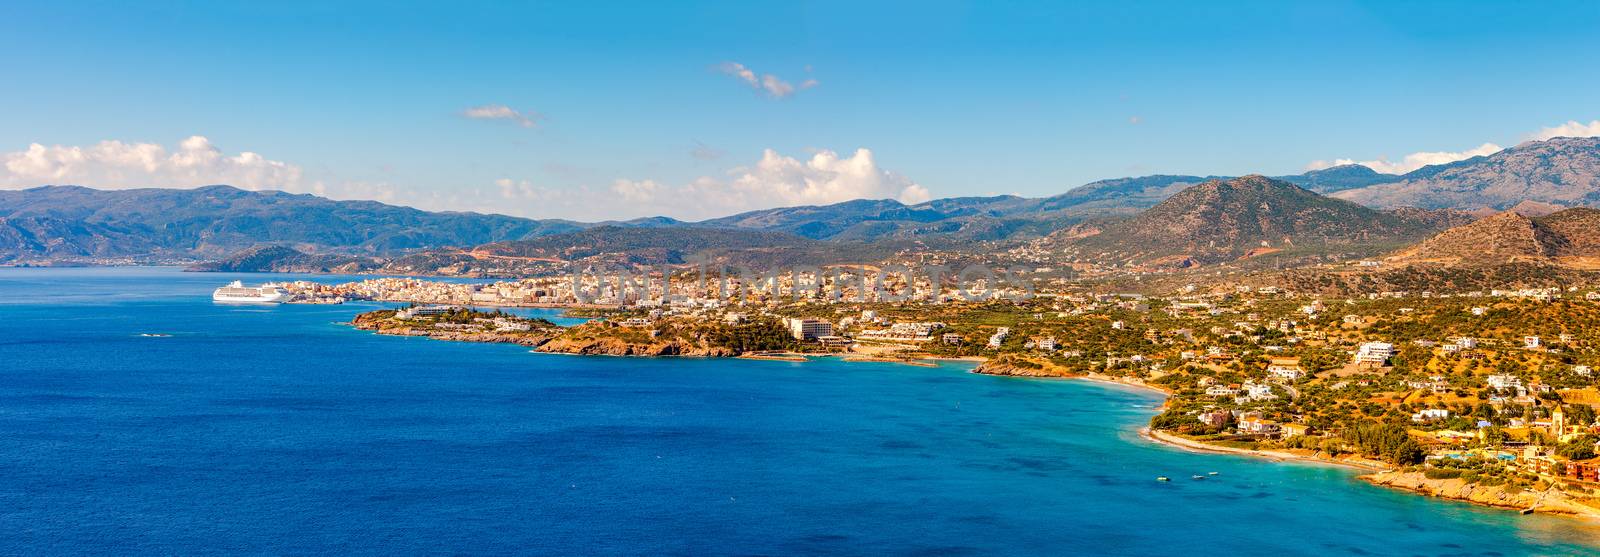 Agios Nikolaos and Mirabello Bay, Panorama. Agios Nikolaos is a picturesque town in the eastern part of the island Crete, Greece